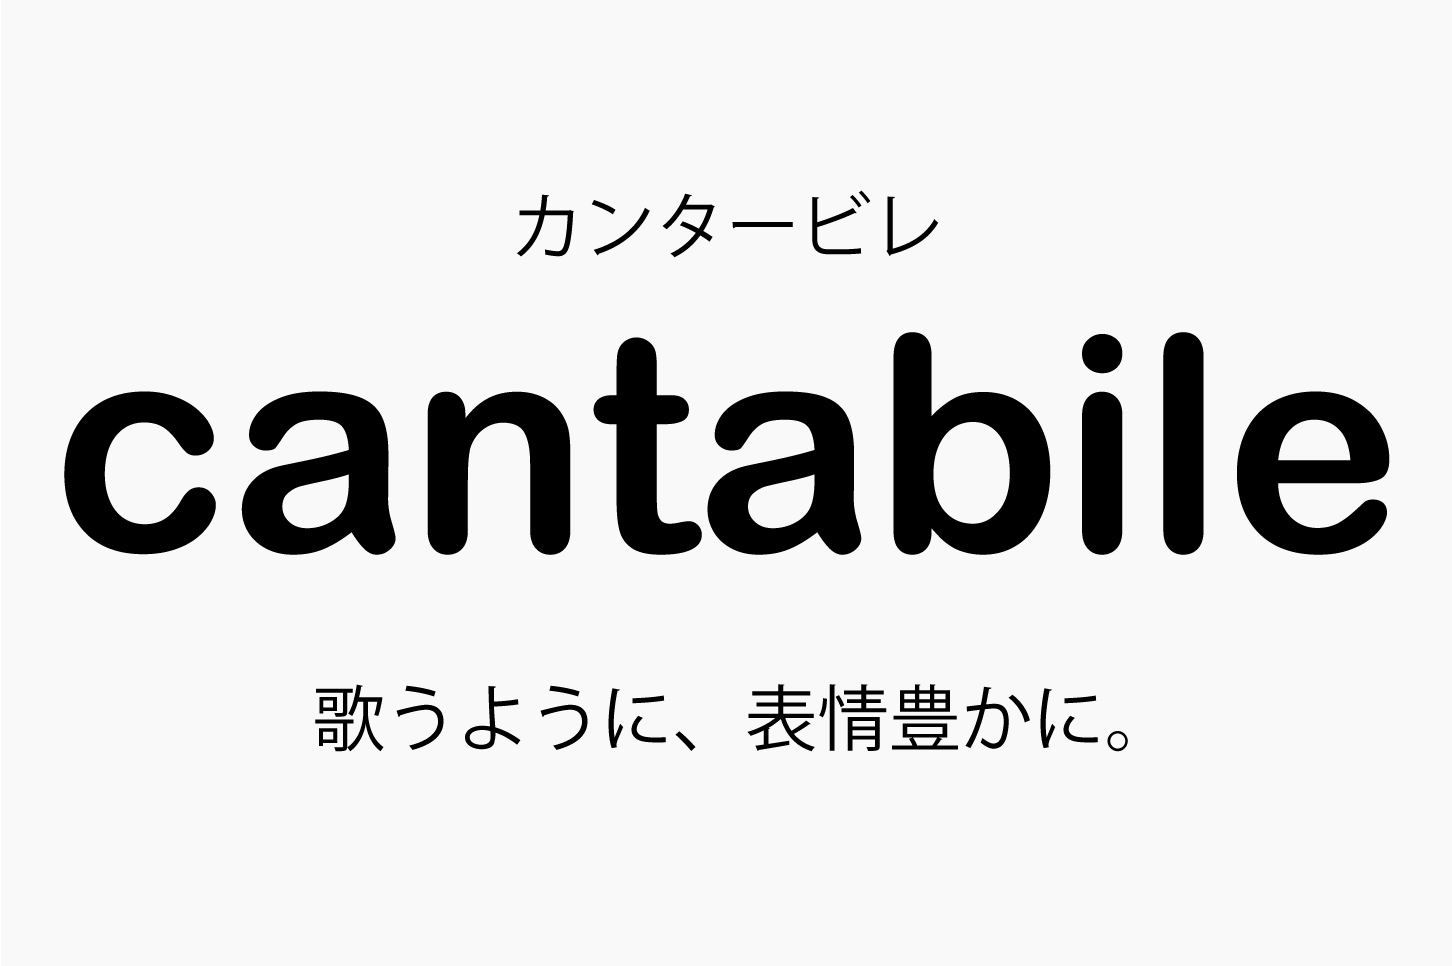 Cantabile カンタービレ の意味 音楽用語辞典